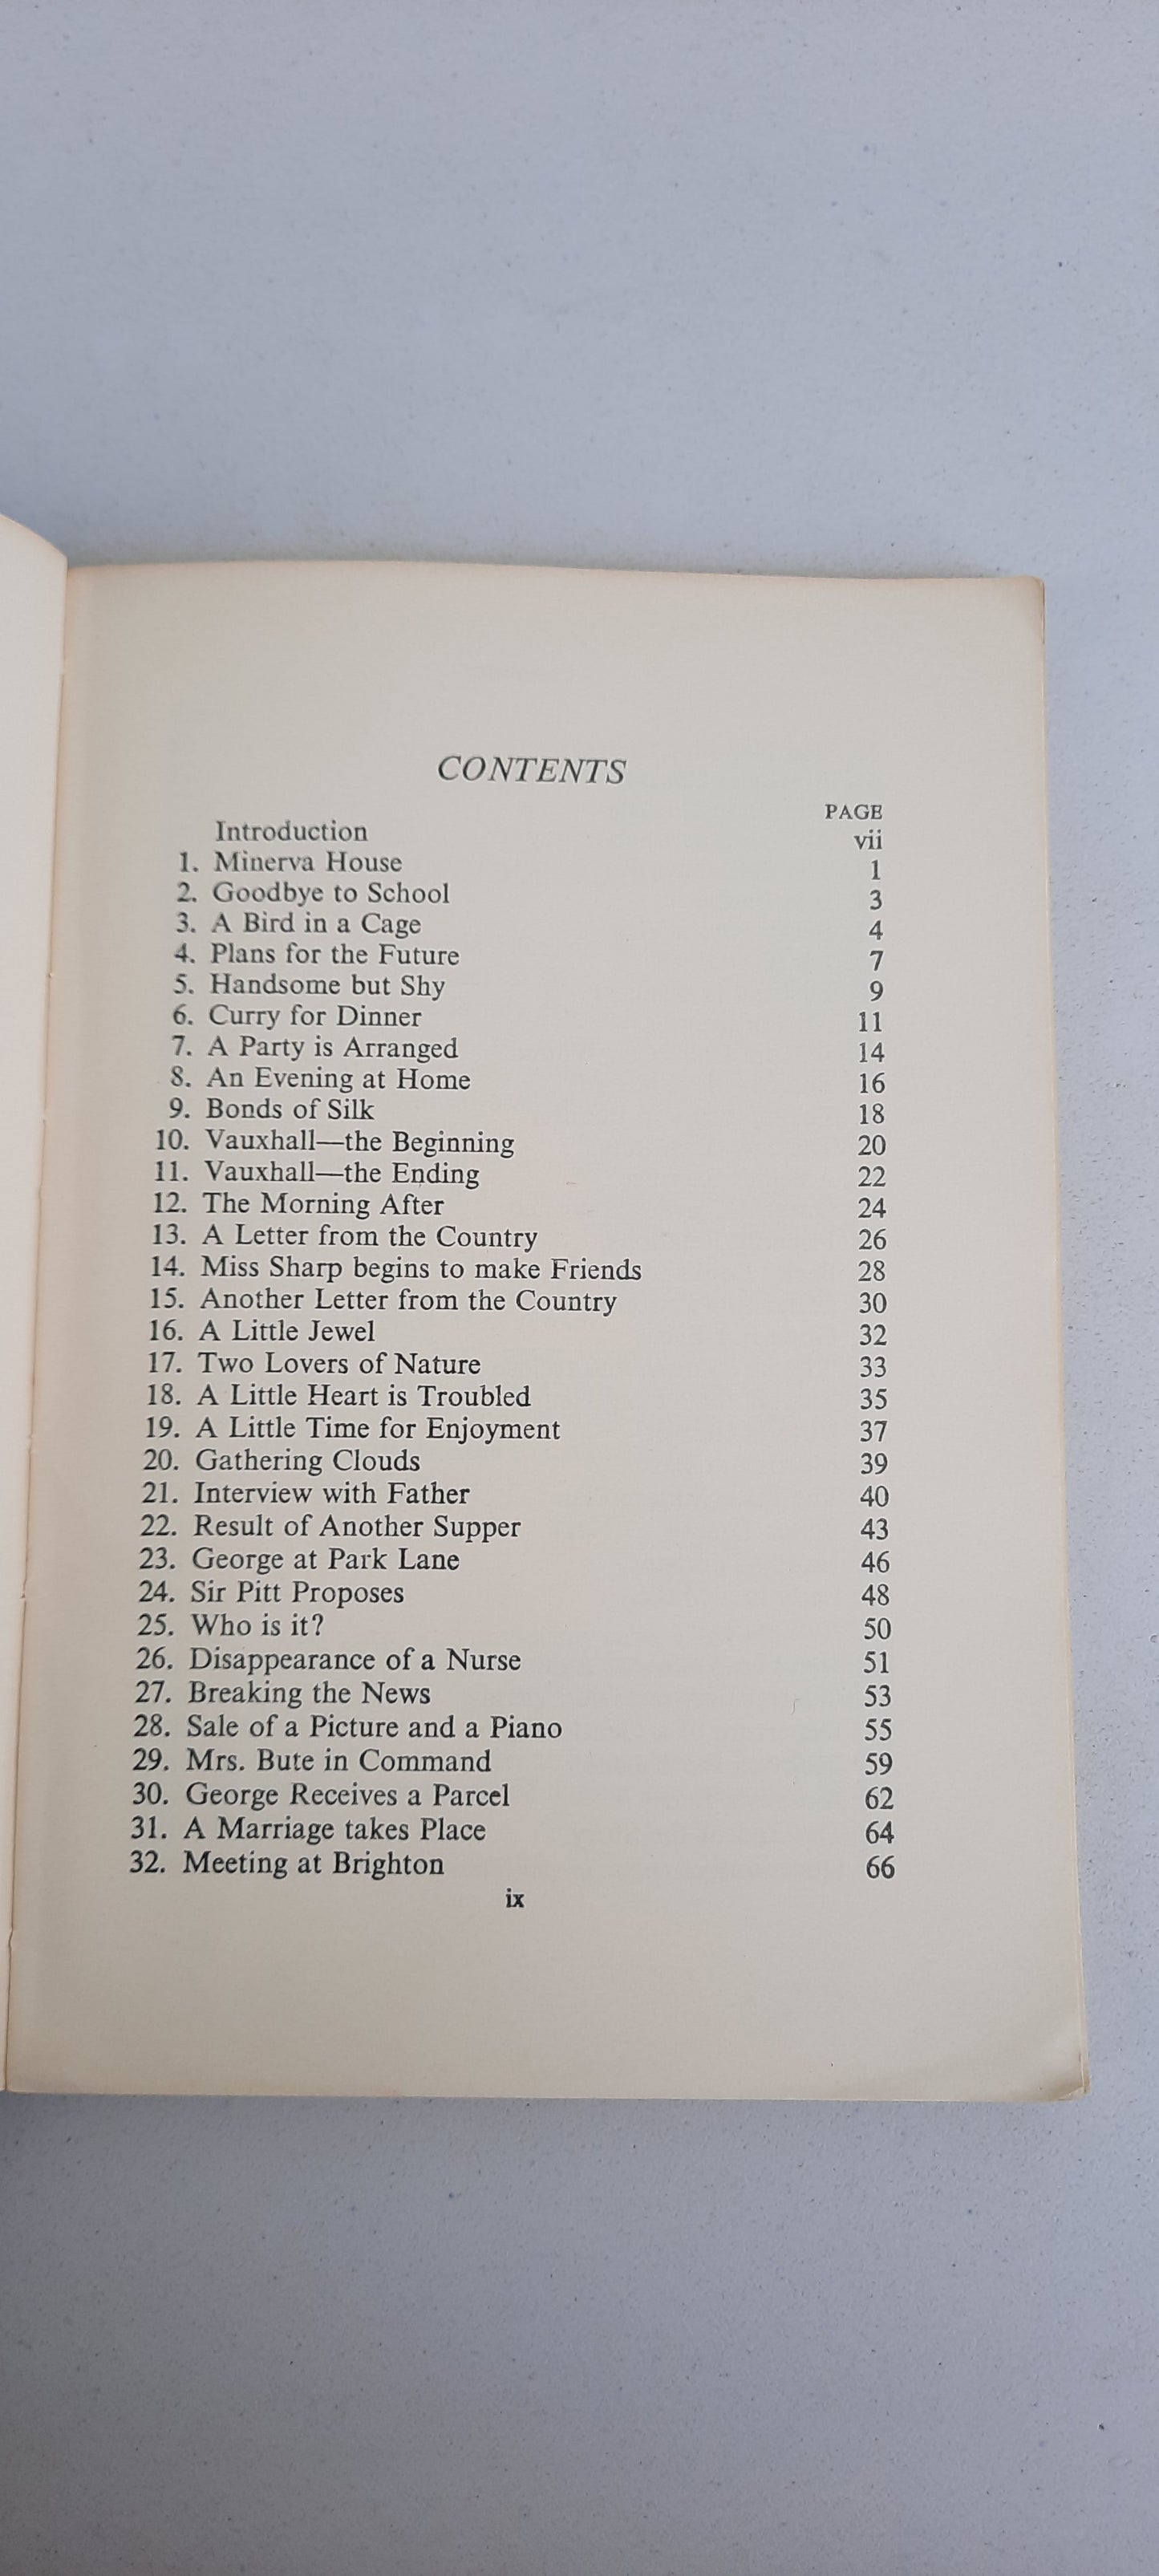 Longmans' Simplified English Series "Vanity Fair" 1960 by W. M. Thackeray